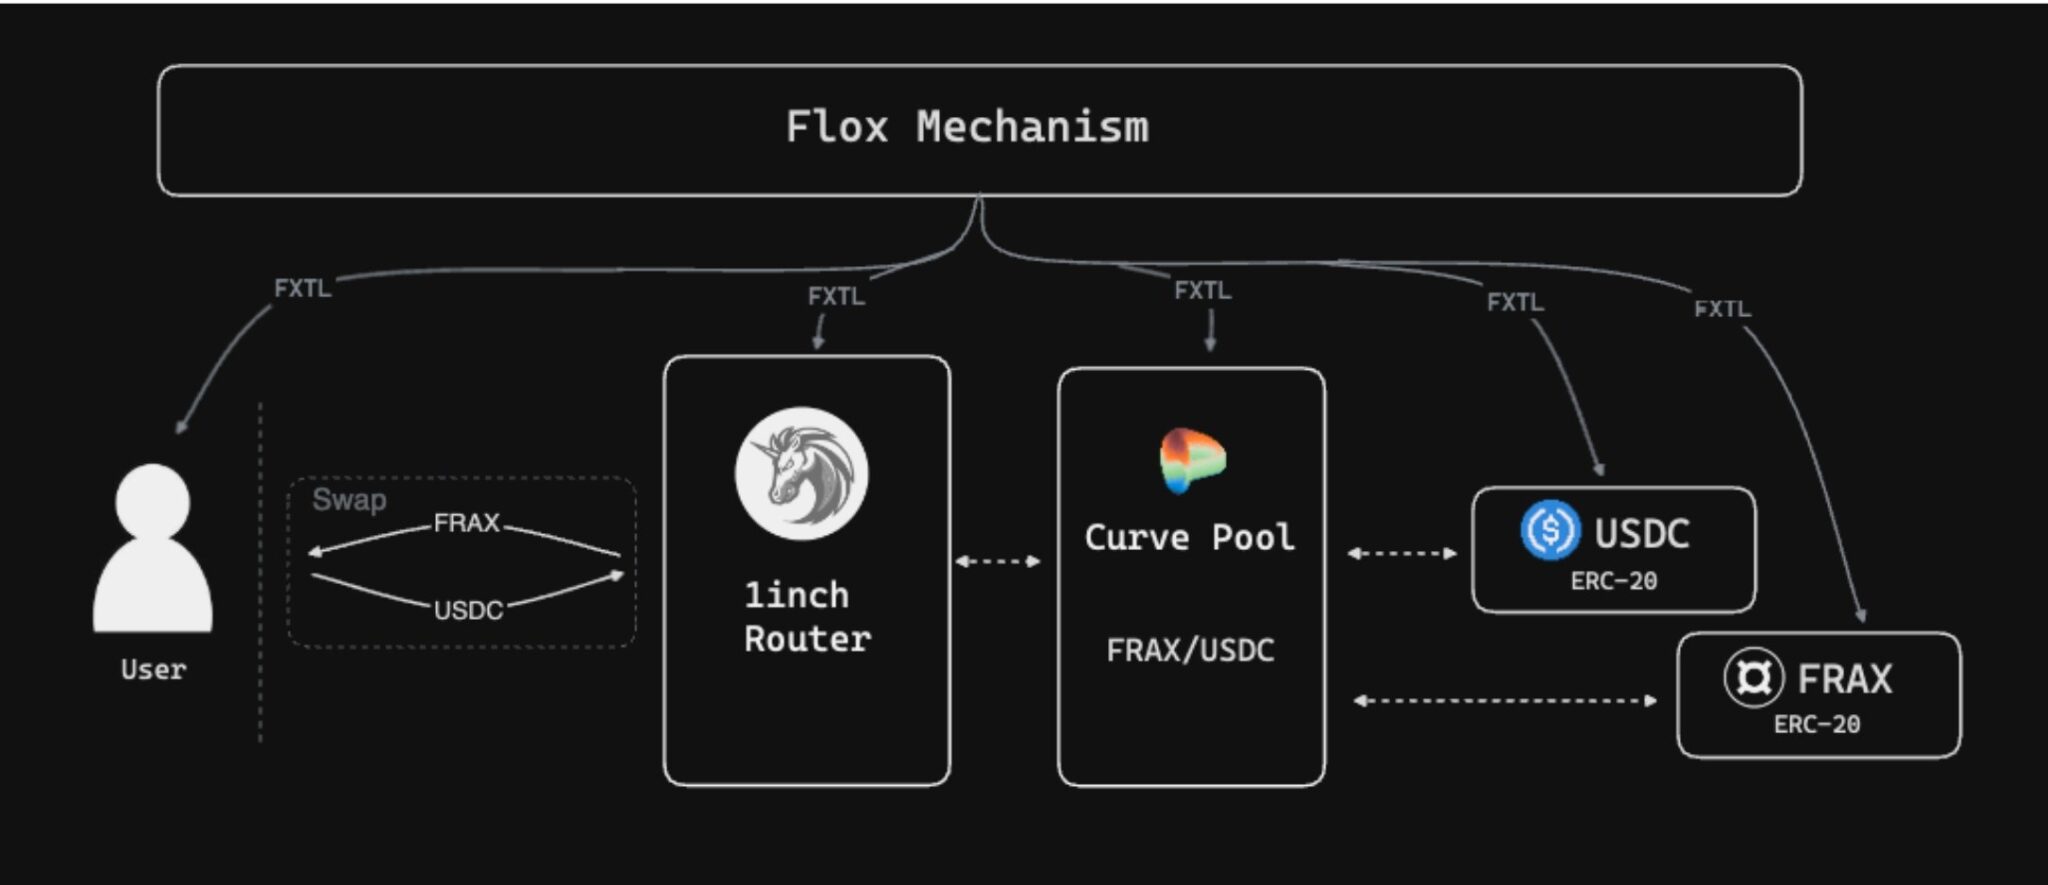 Flox reward mechanism diagram